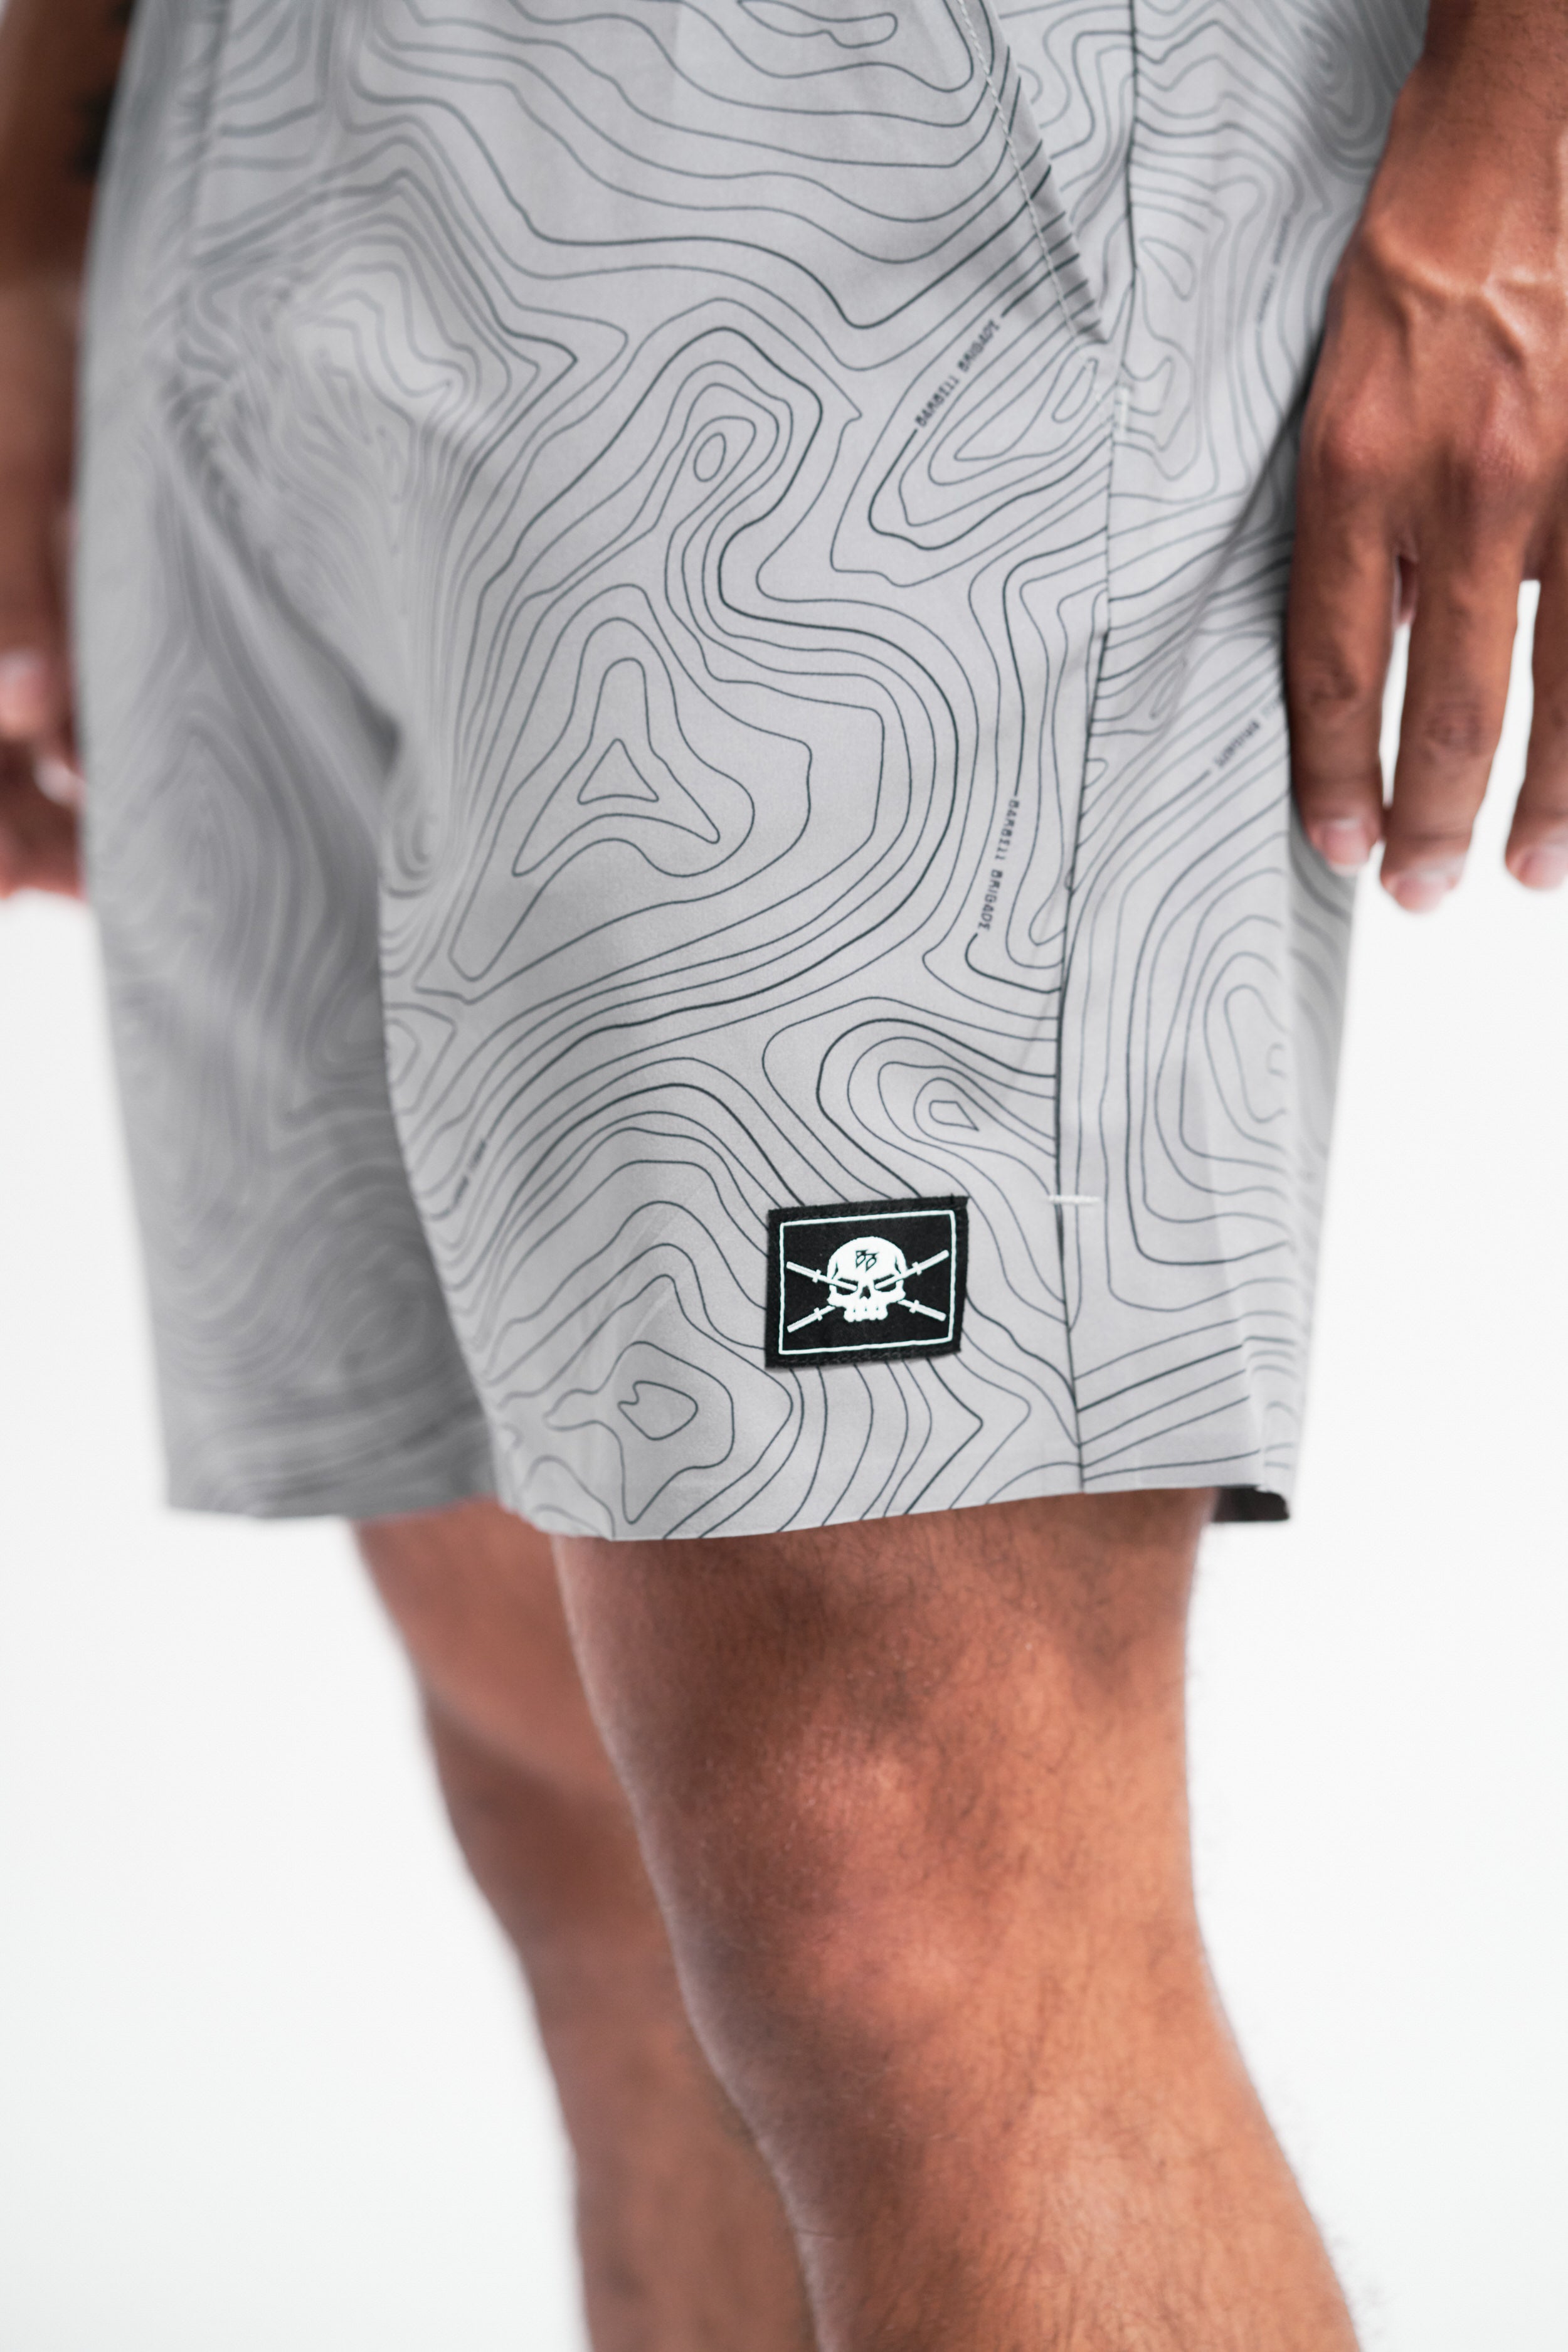 Amphibious MKIII - Shorts (Grey Topographic)